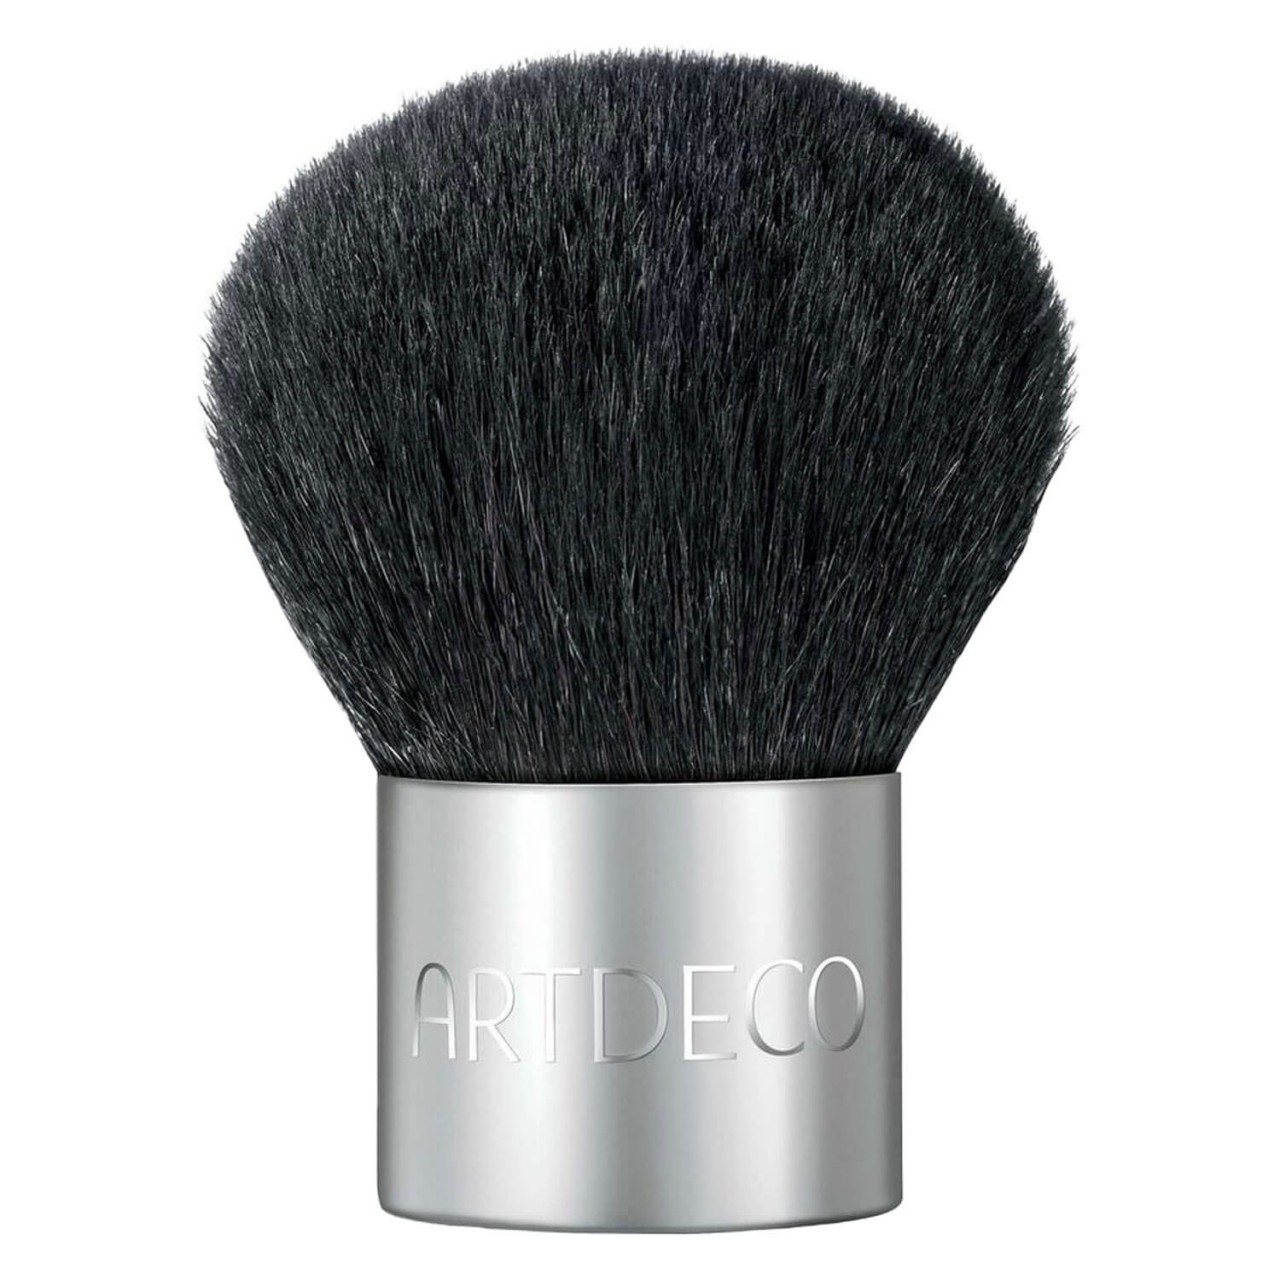 Artdeco Tools - Kabuki Brush for Mineral Powder Foundation von Artdeco